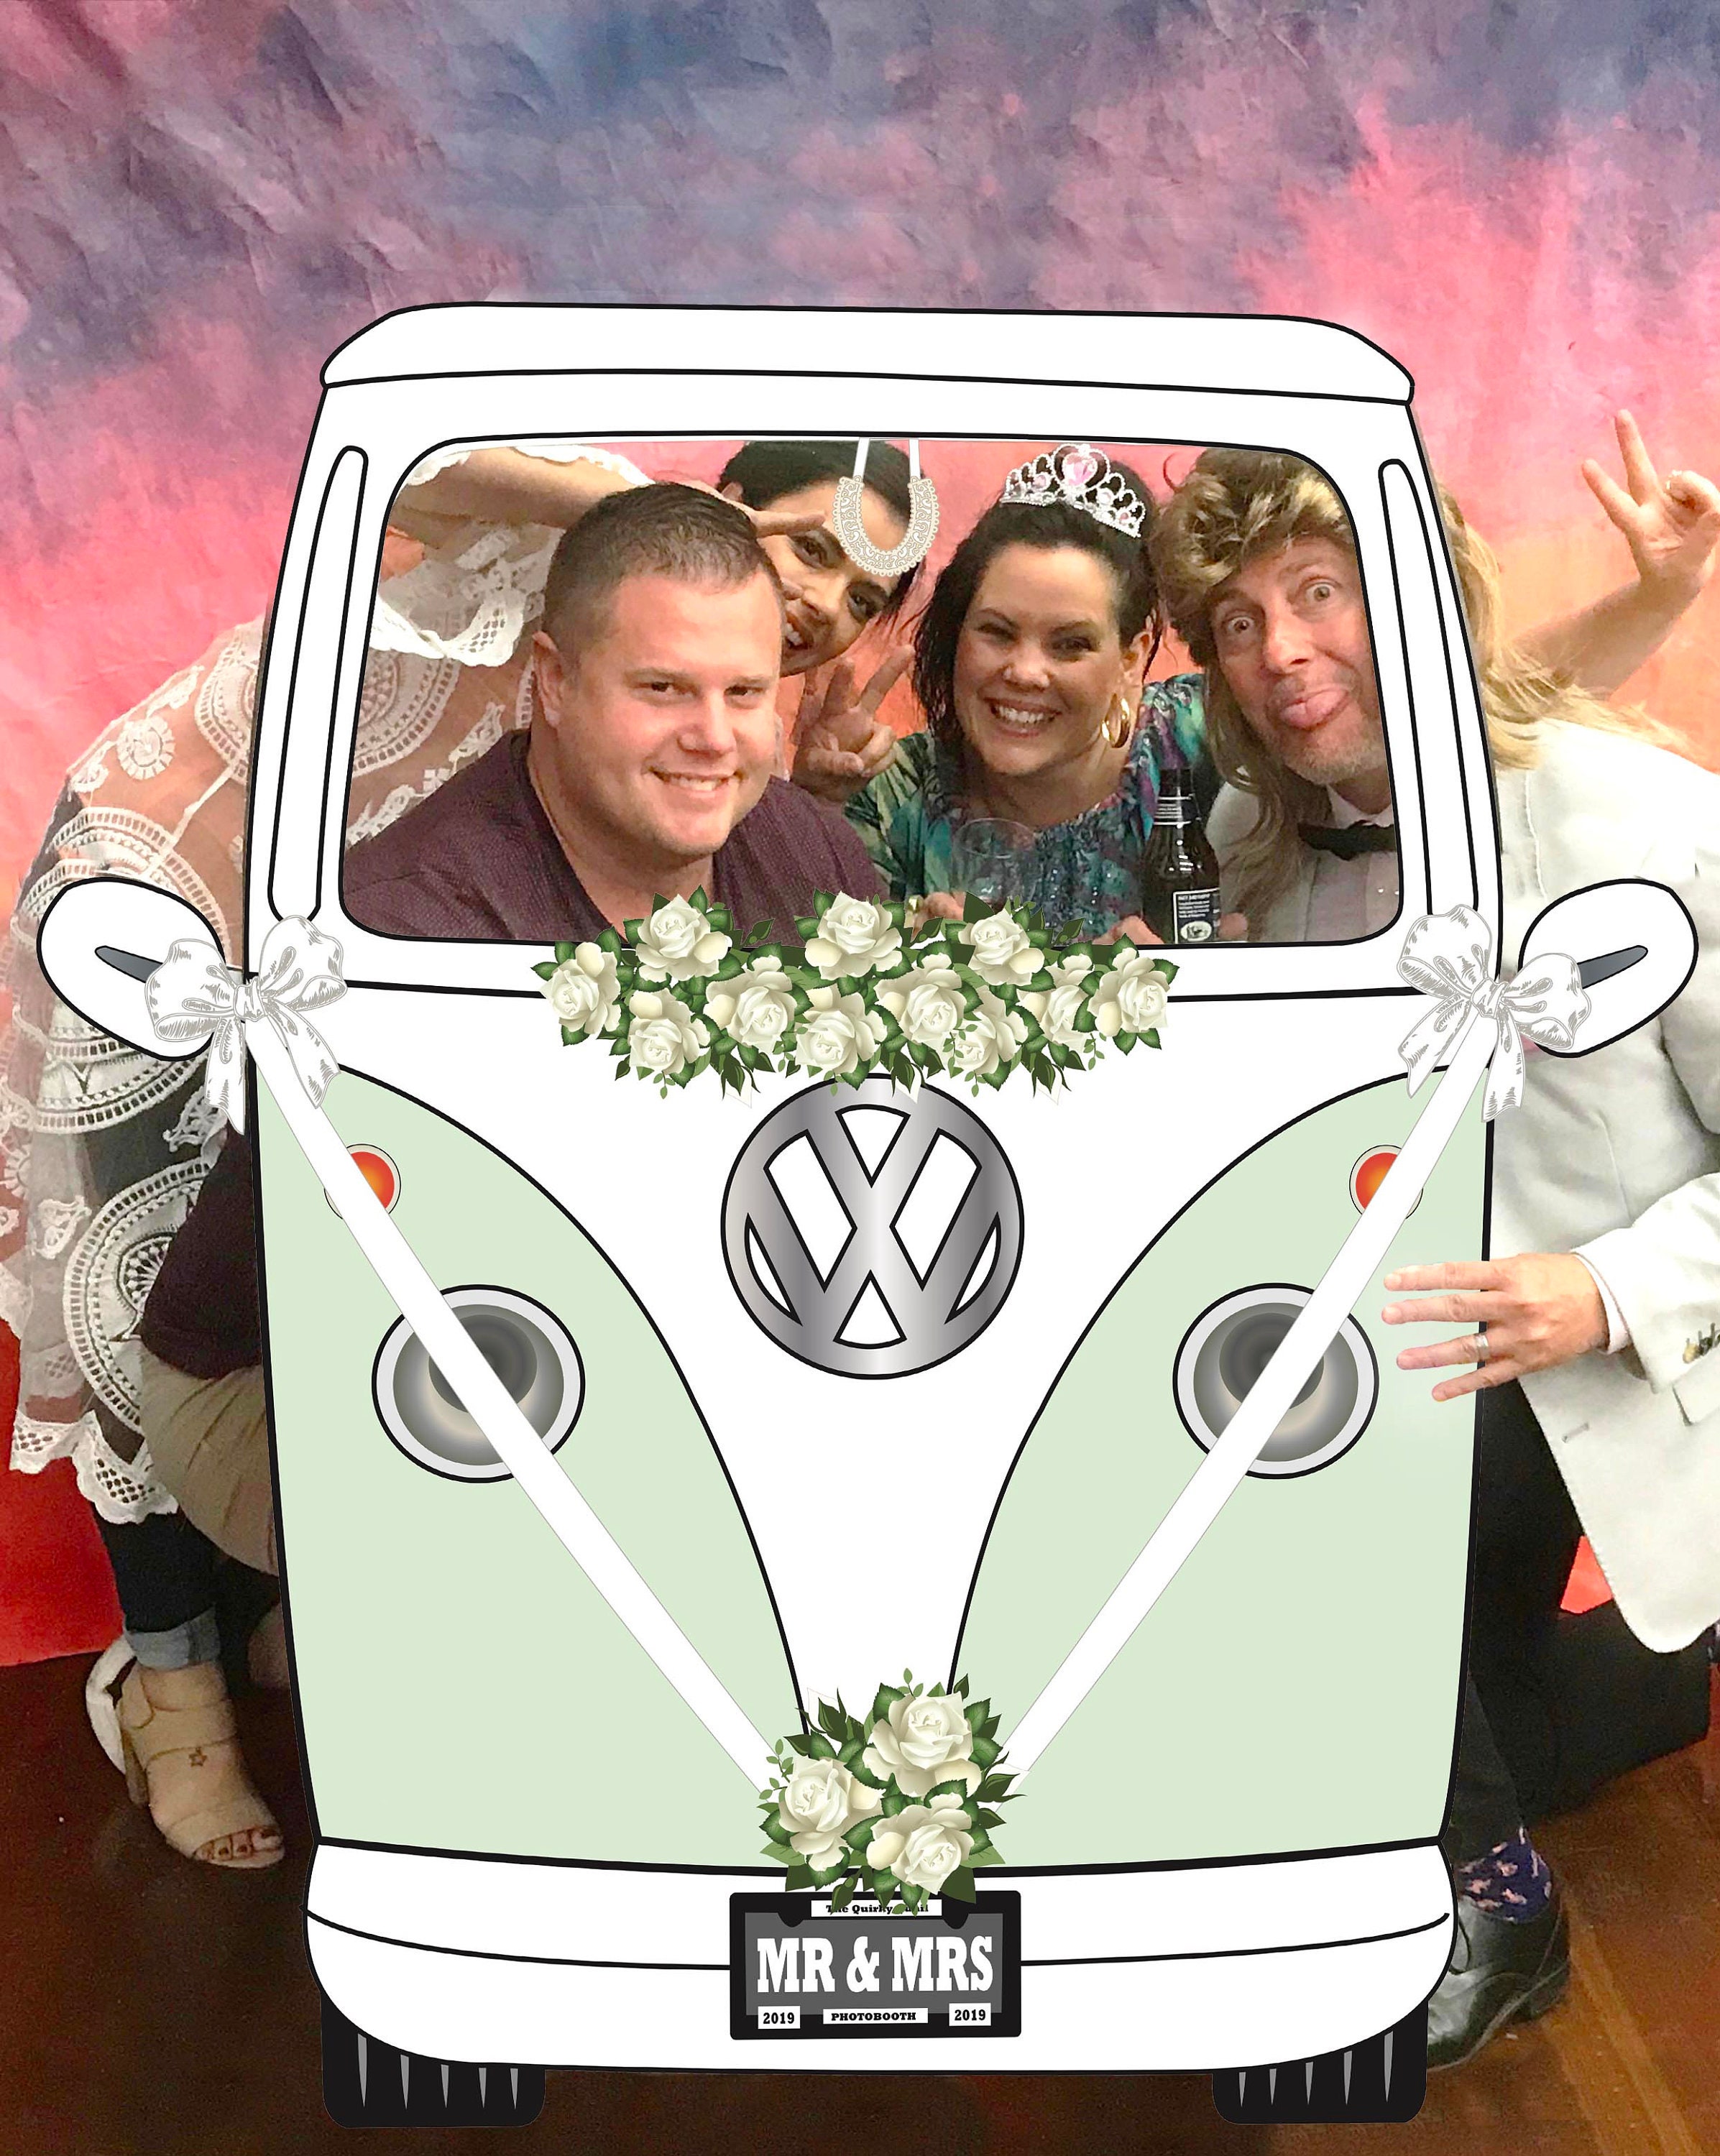 Hippie wedding Van Photo booth Backdrop PRINTABLE Wedding | Etsy